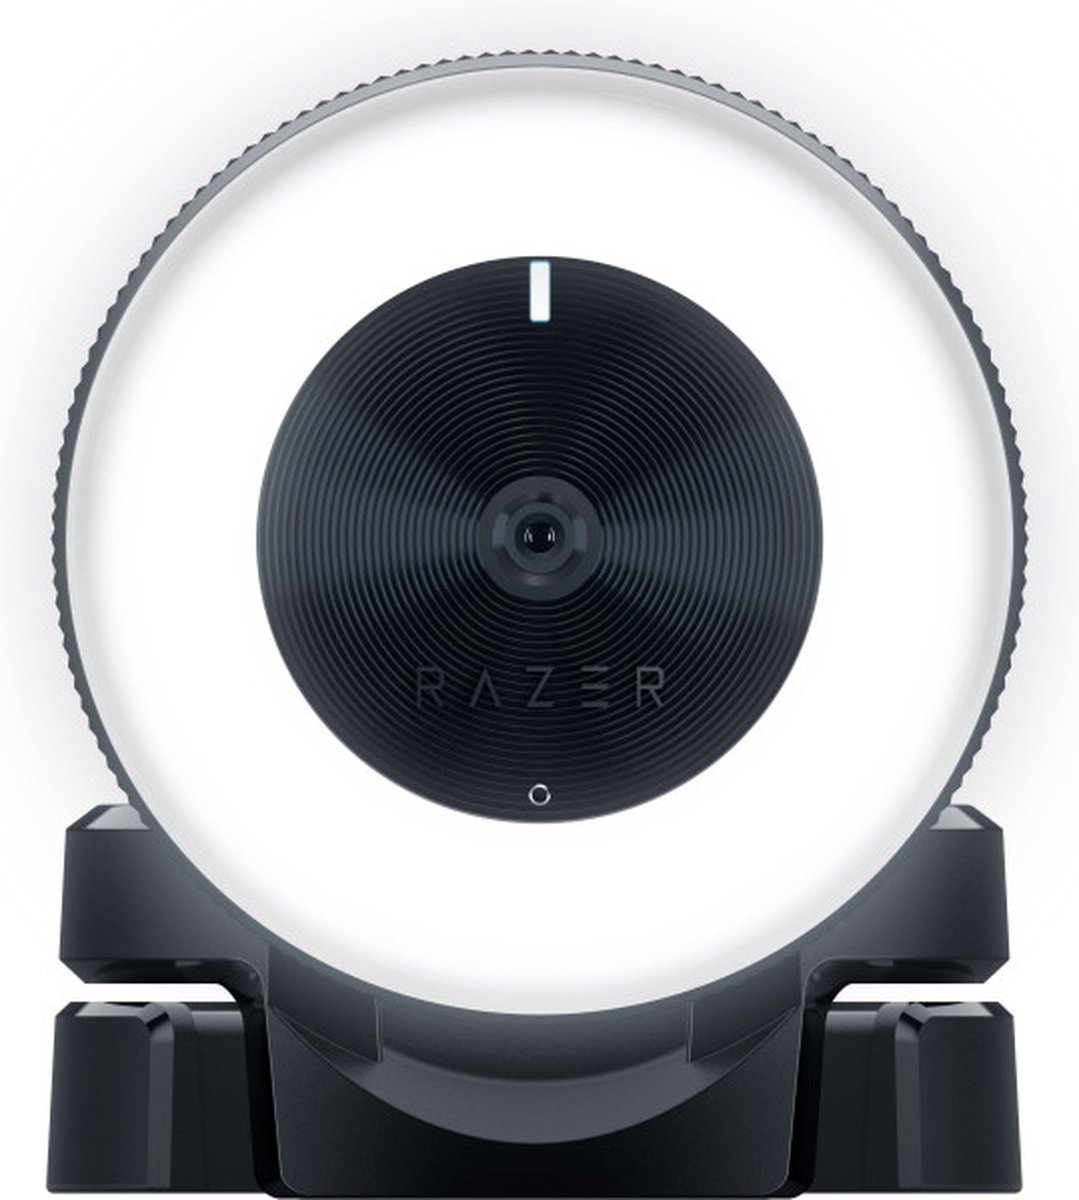 Razer Kiyo - Streaming Webcam - Webcam met Ringlamp - Full HD